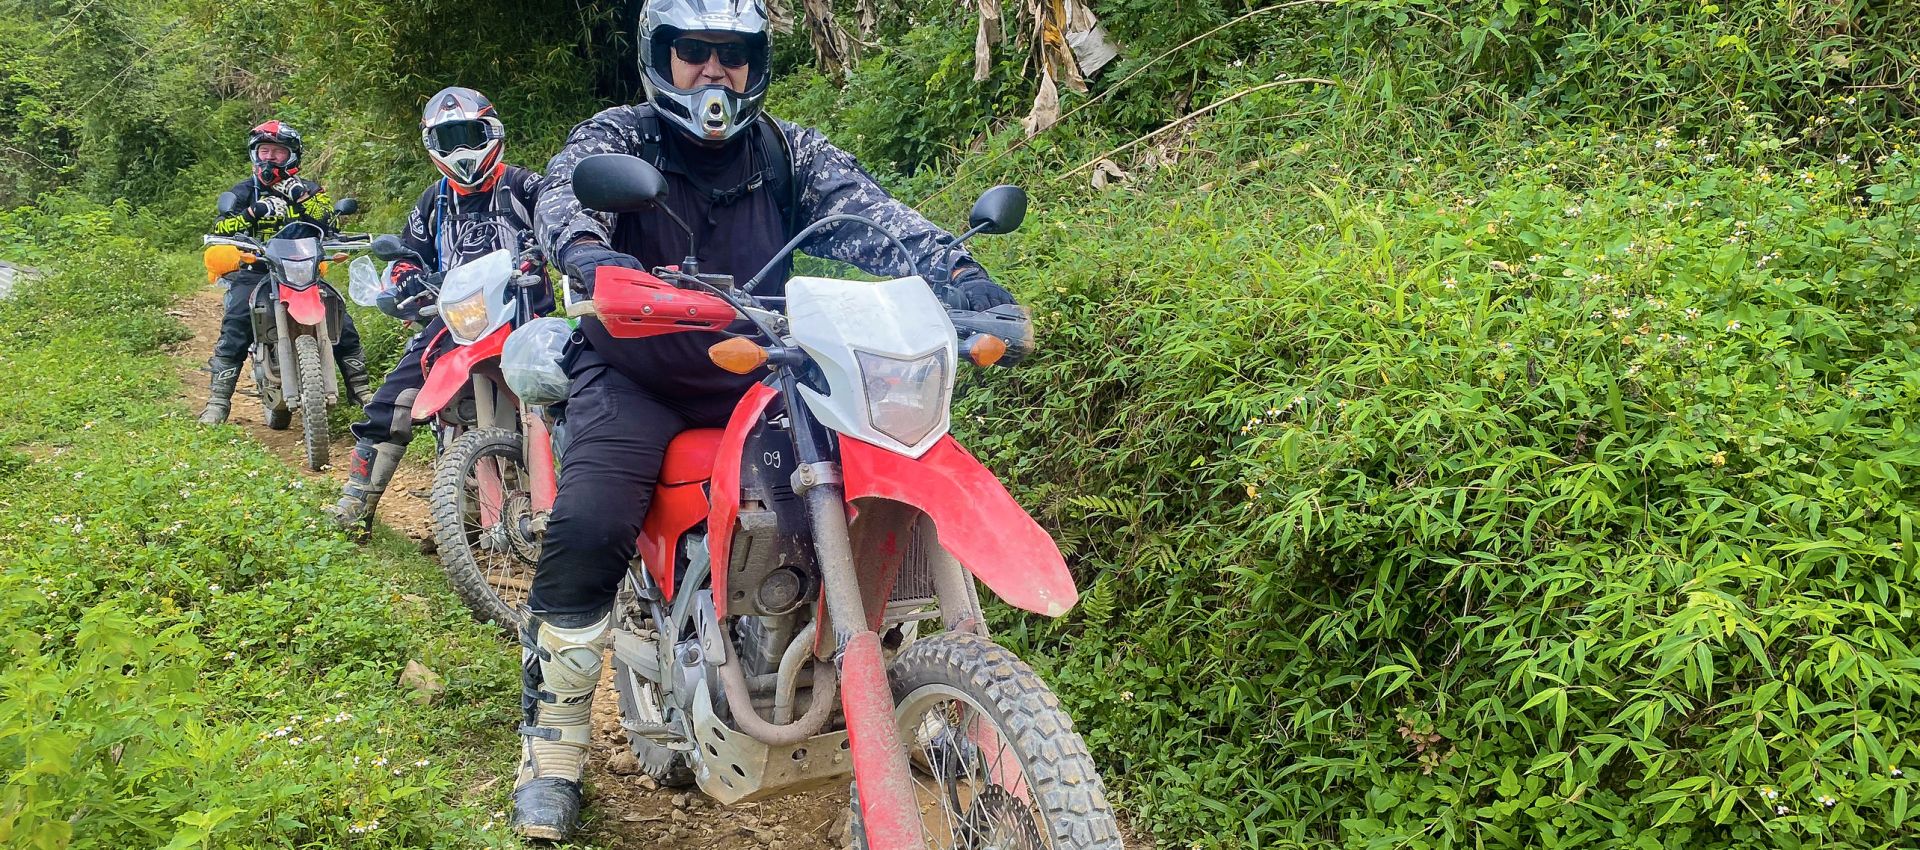 Enchanting North Vietnam: 6-Day Motorbike Expedition